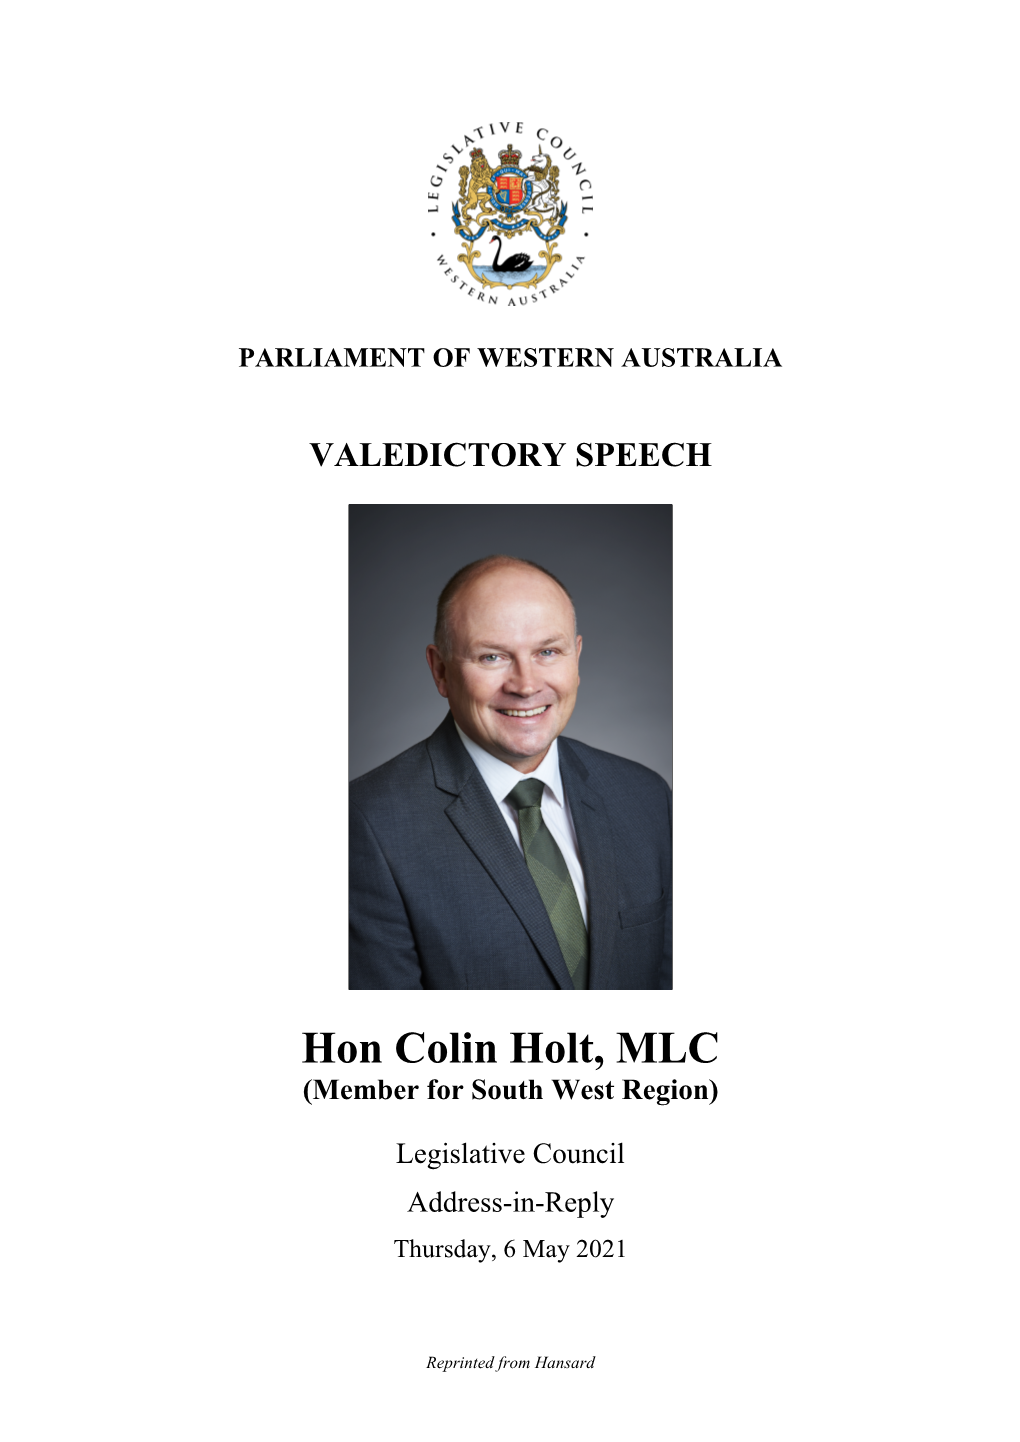 Hon Colin Holt, MLC (Member for South West Region)